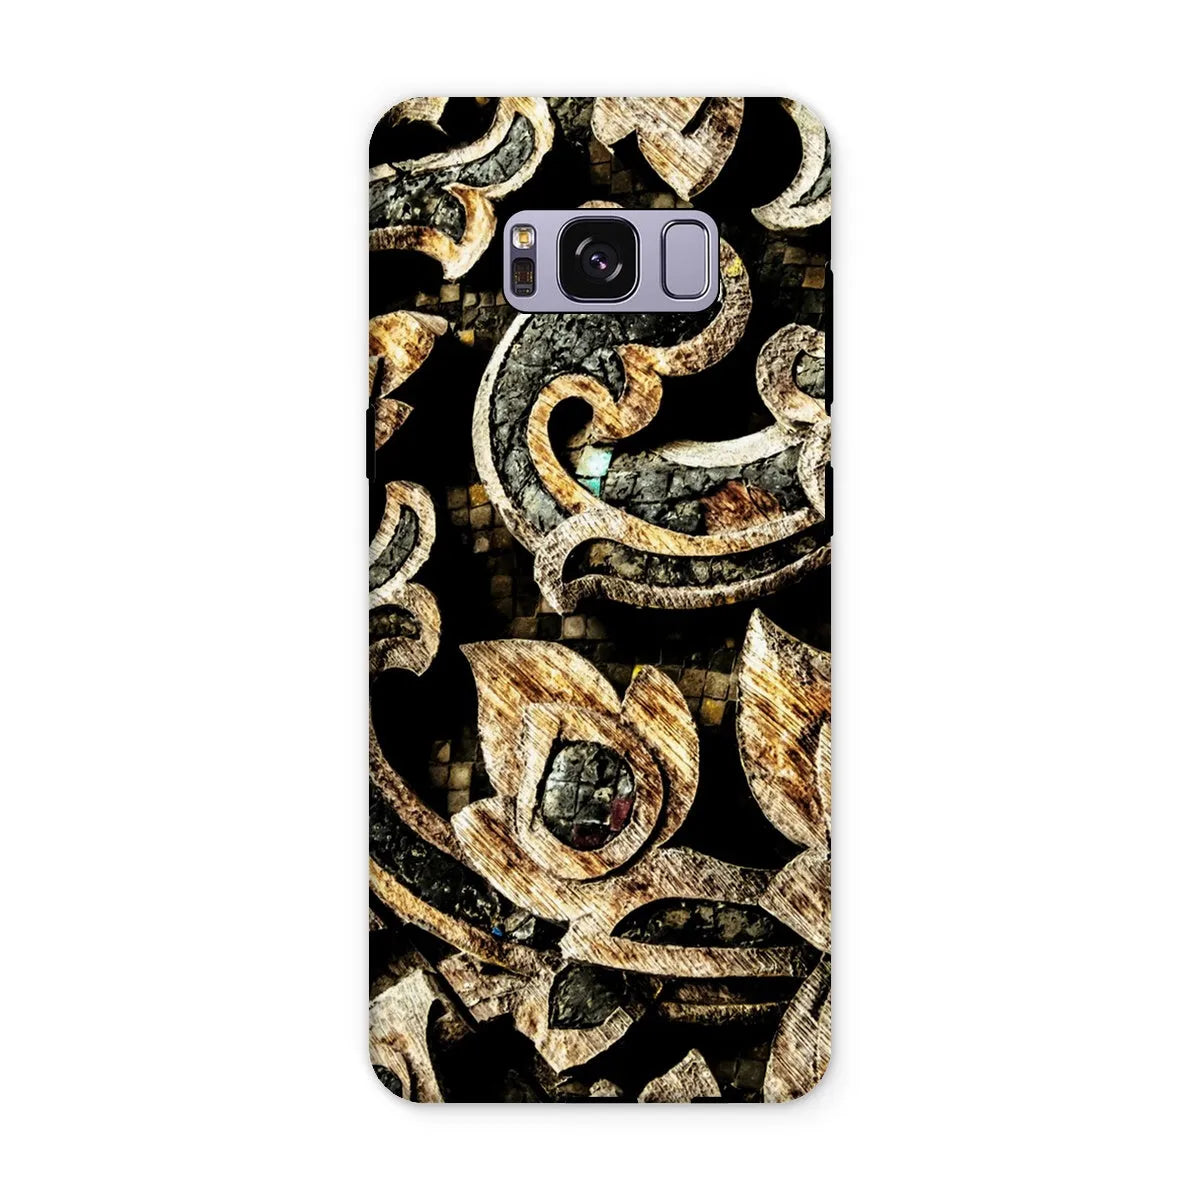 Against The Grain Tough Phone Case - Samsung Galaxy S8 Plus / Matte - Mobile Phone Cases - Aesthetic Art